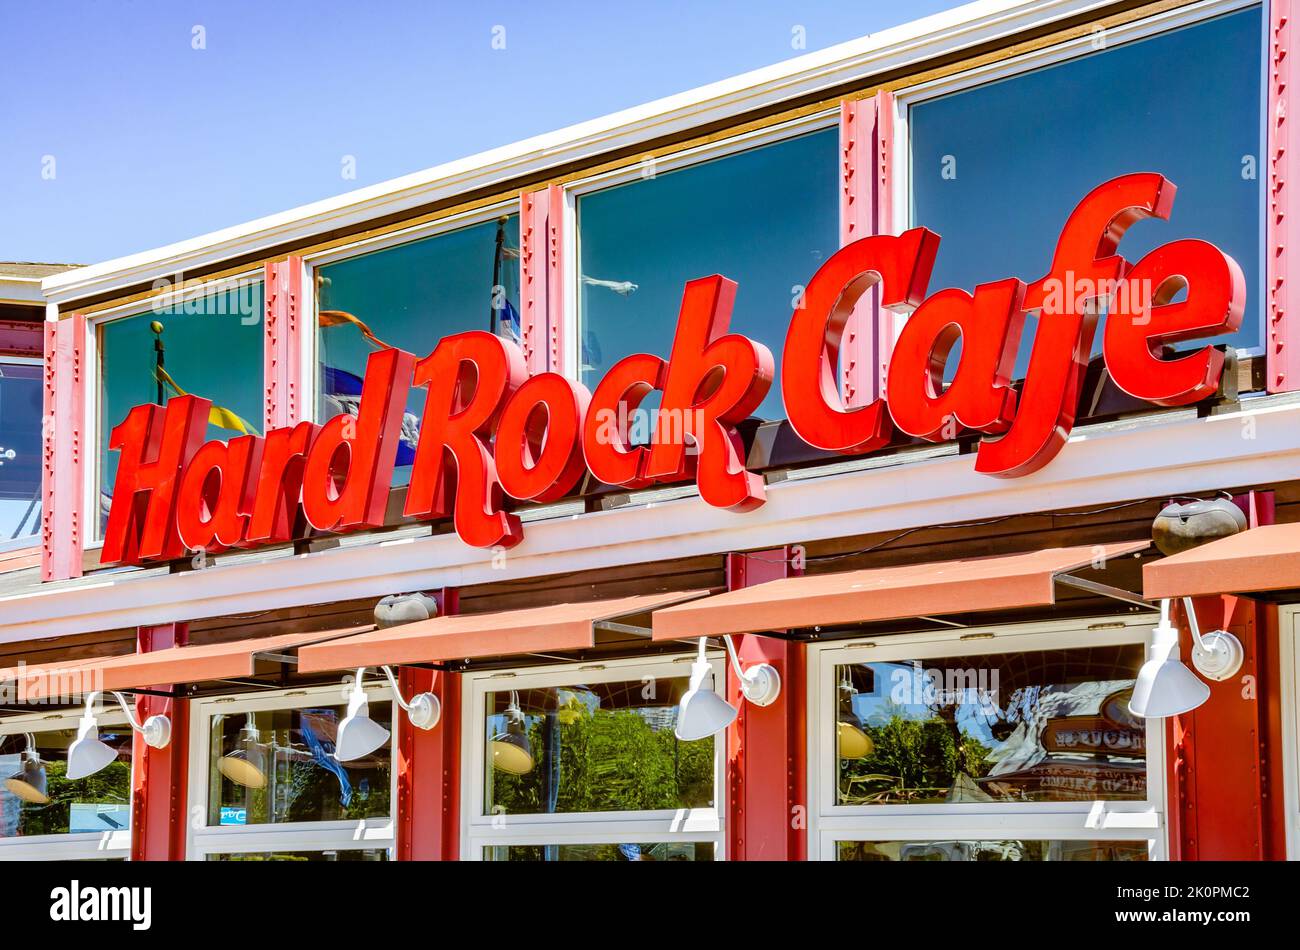 The Hard Rock Cafe at Pier 39 in San Francisco, California. Stock Photo